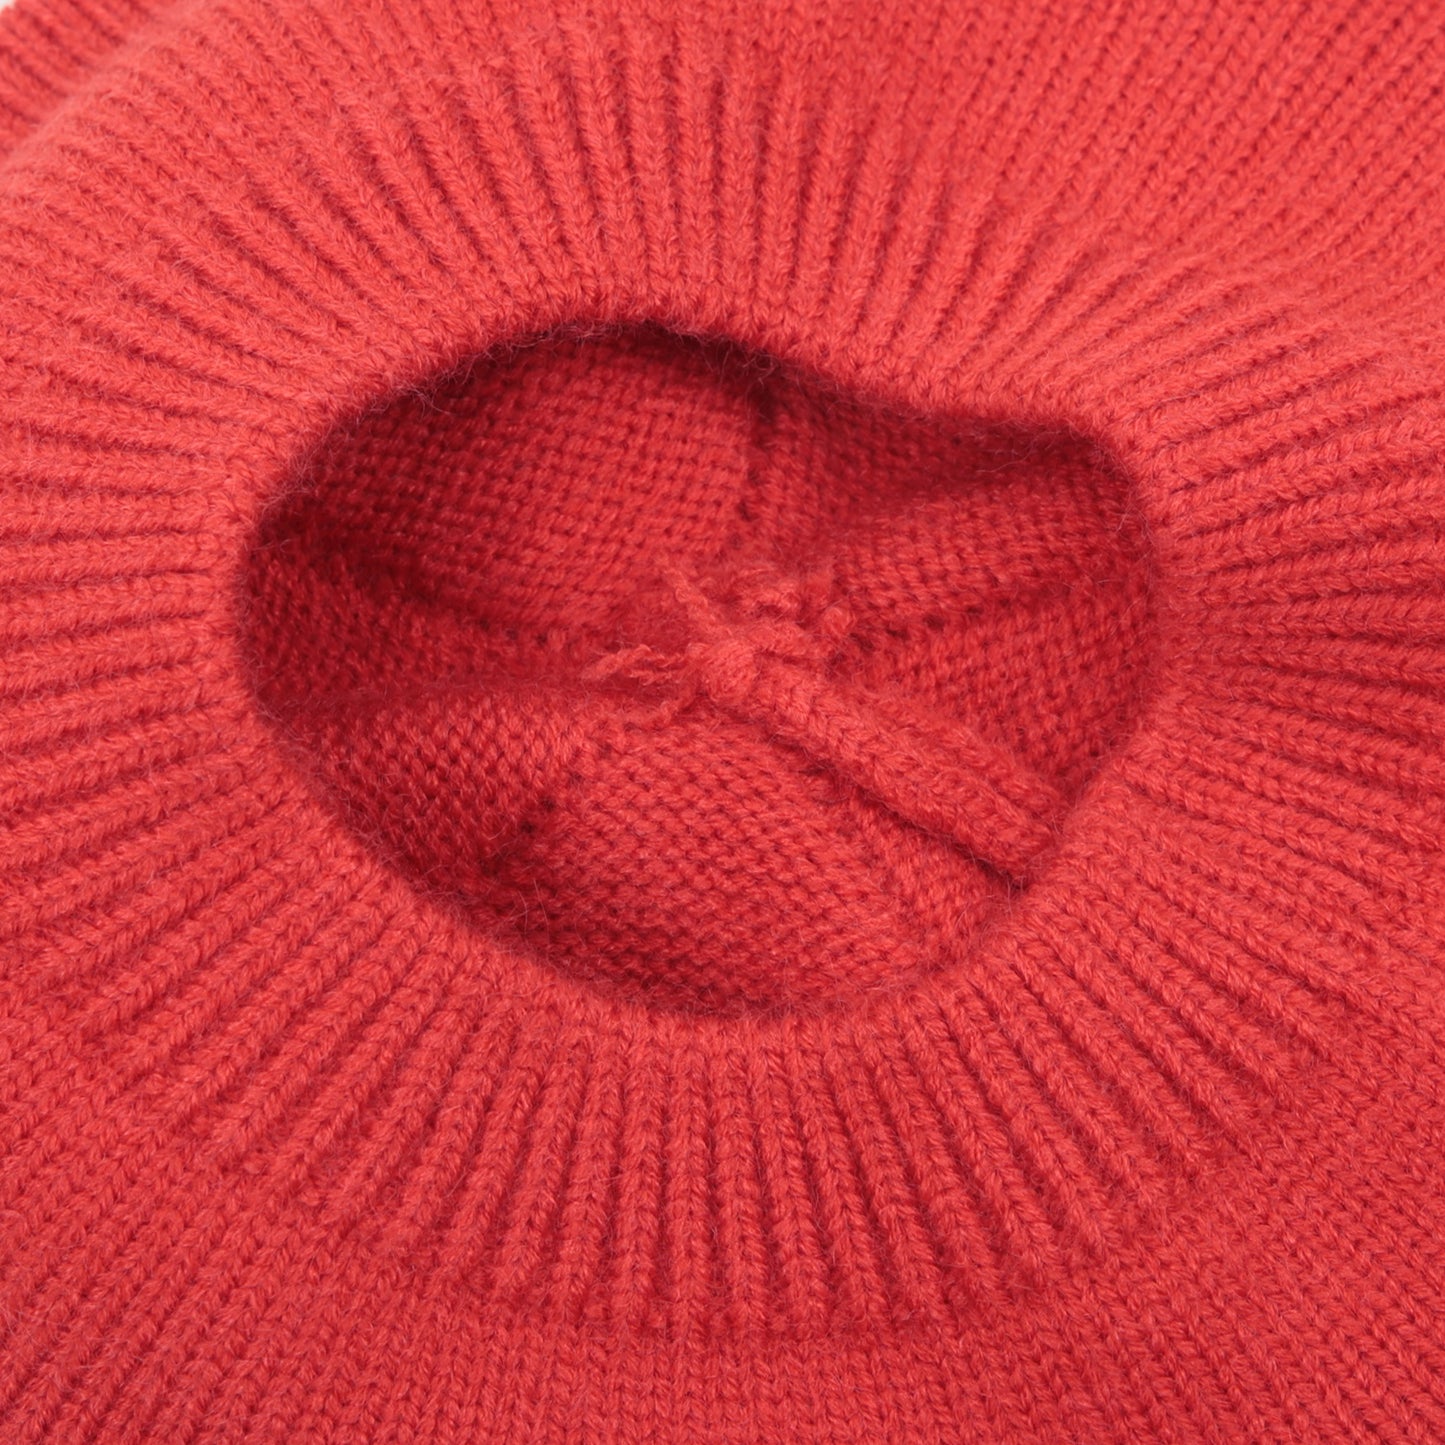 Strick-Baskenmütze rot